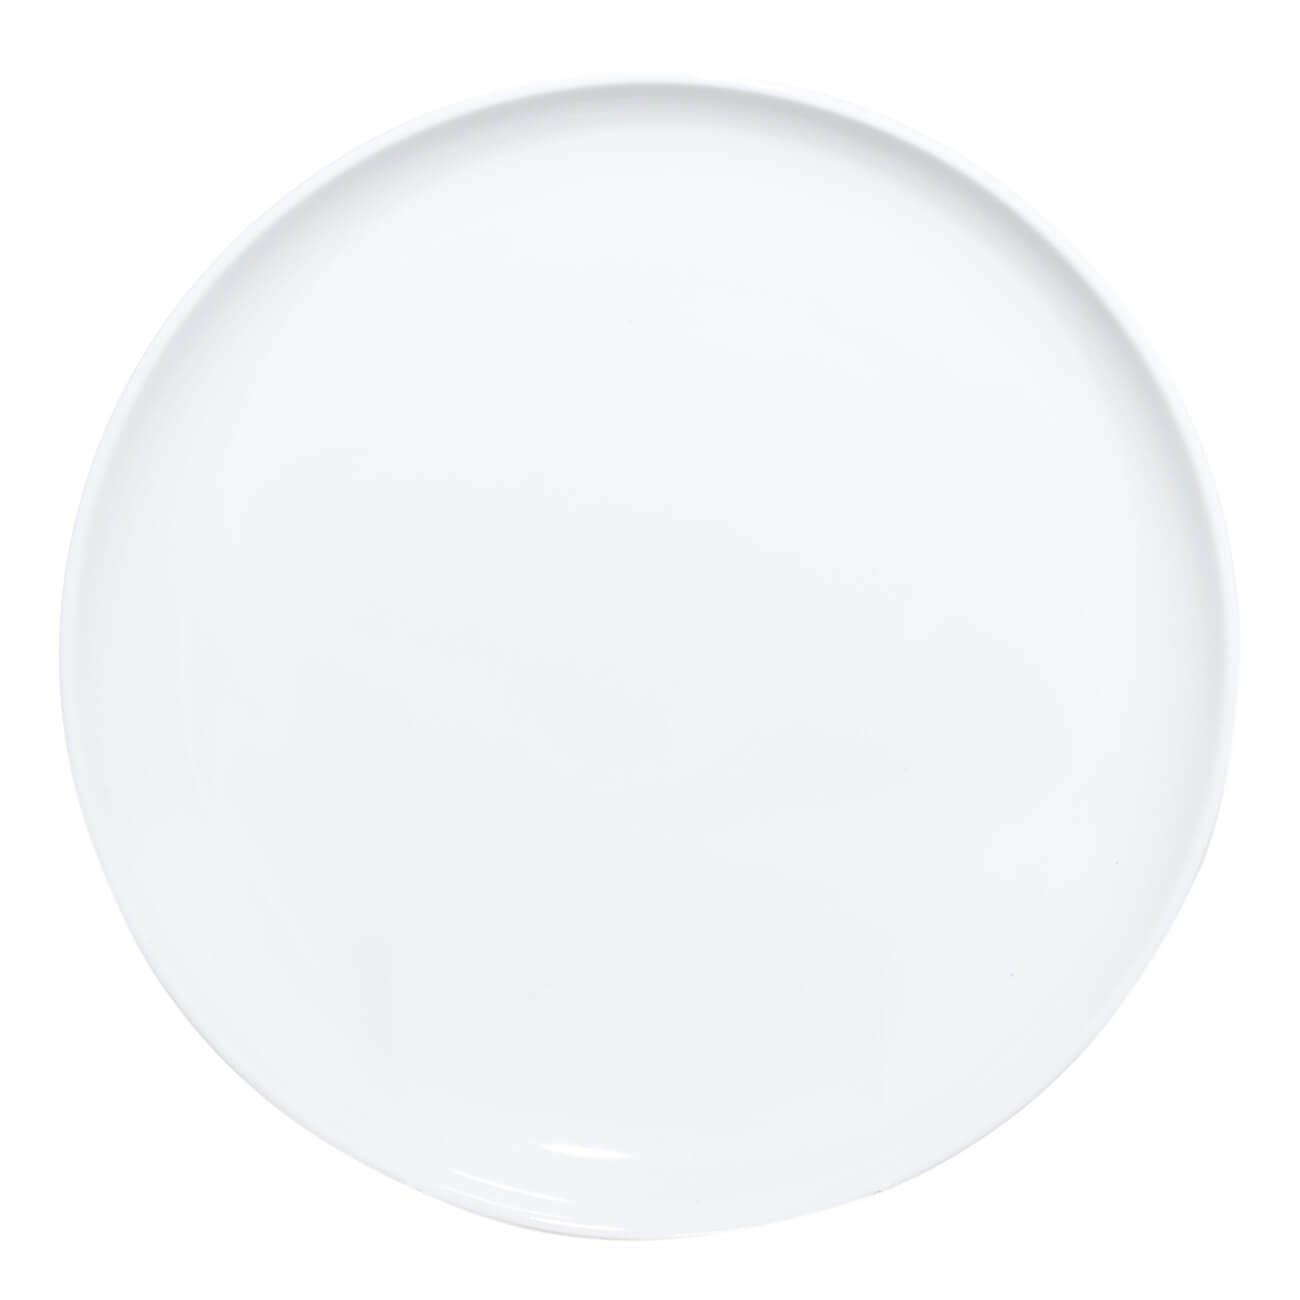 Тарелка обеденная, 25 см, фарфор P, белая, Silence kuchenland тарелка обеденная 28 см фарфор f antarctica